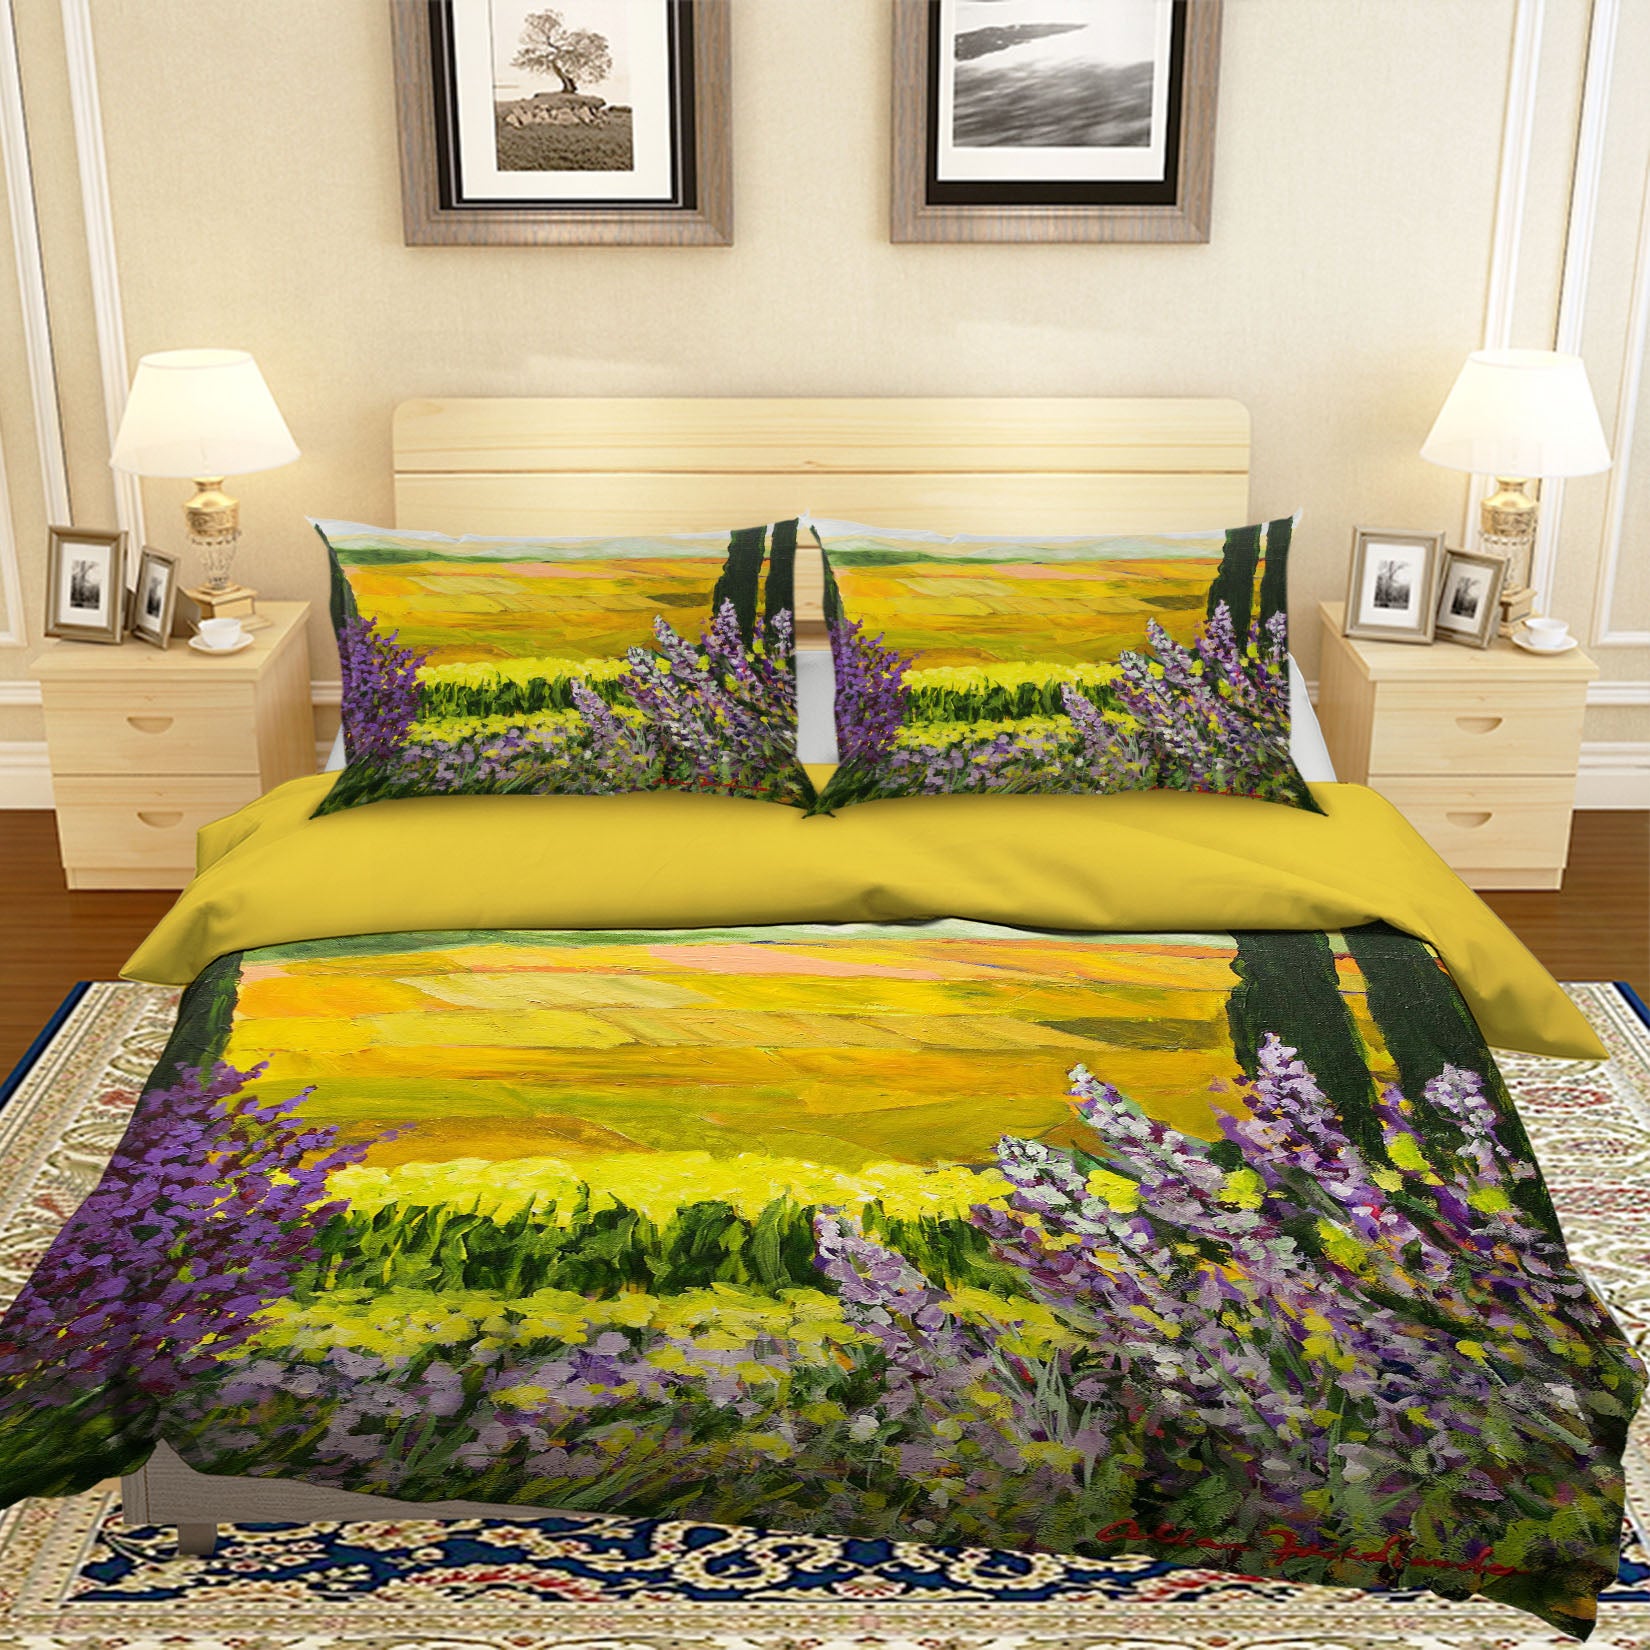 3D Golden Acres 1123 Allan P. Friedlander Bedding Bed Pillowcases Quilt